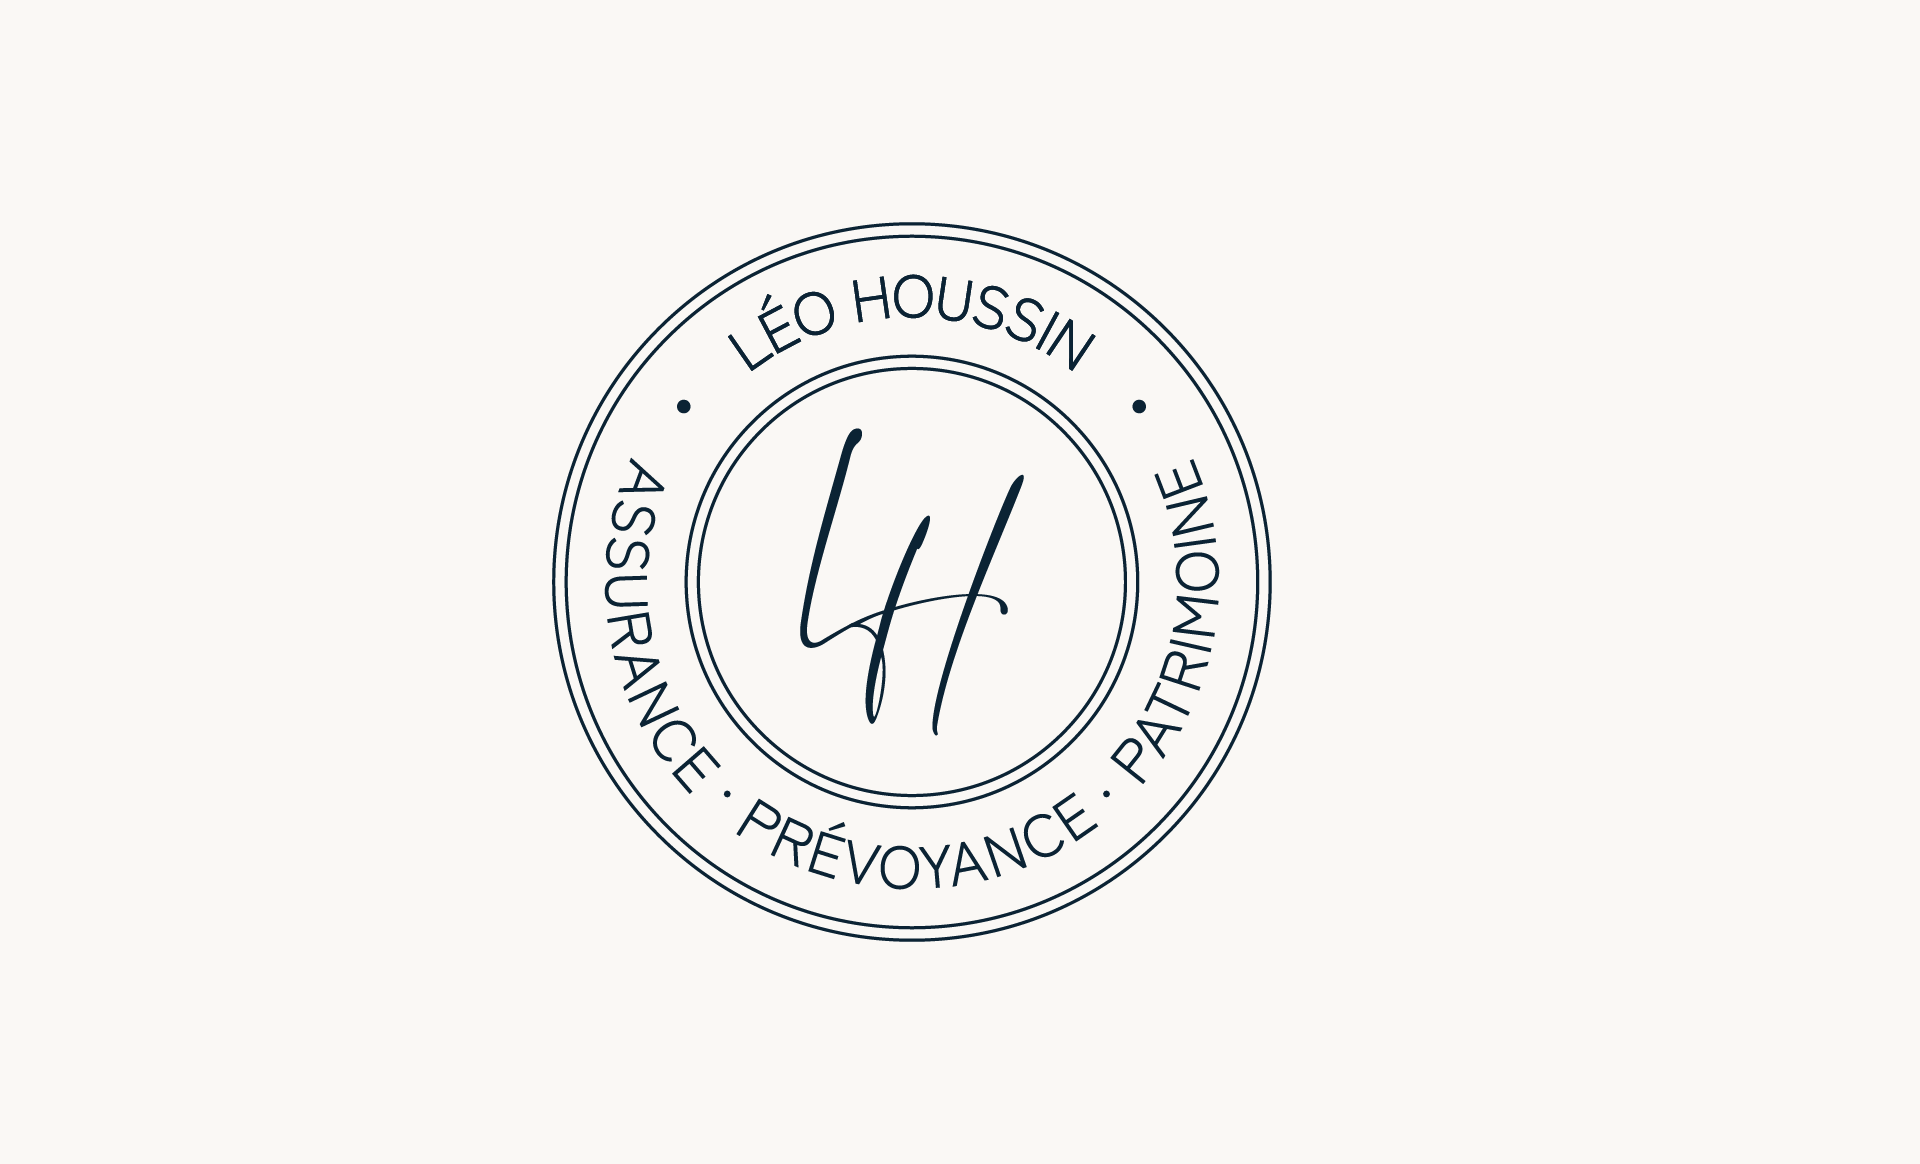 Leo-Houssin-logo-01